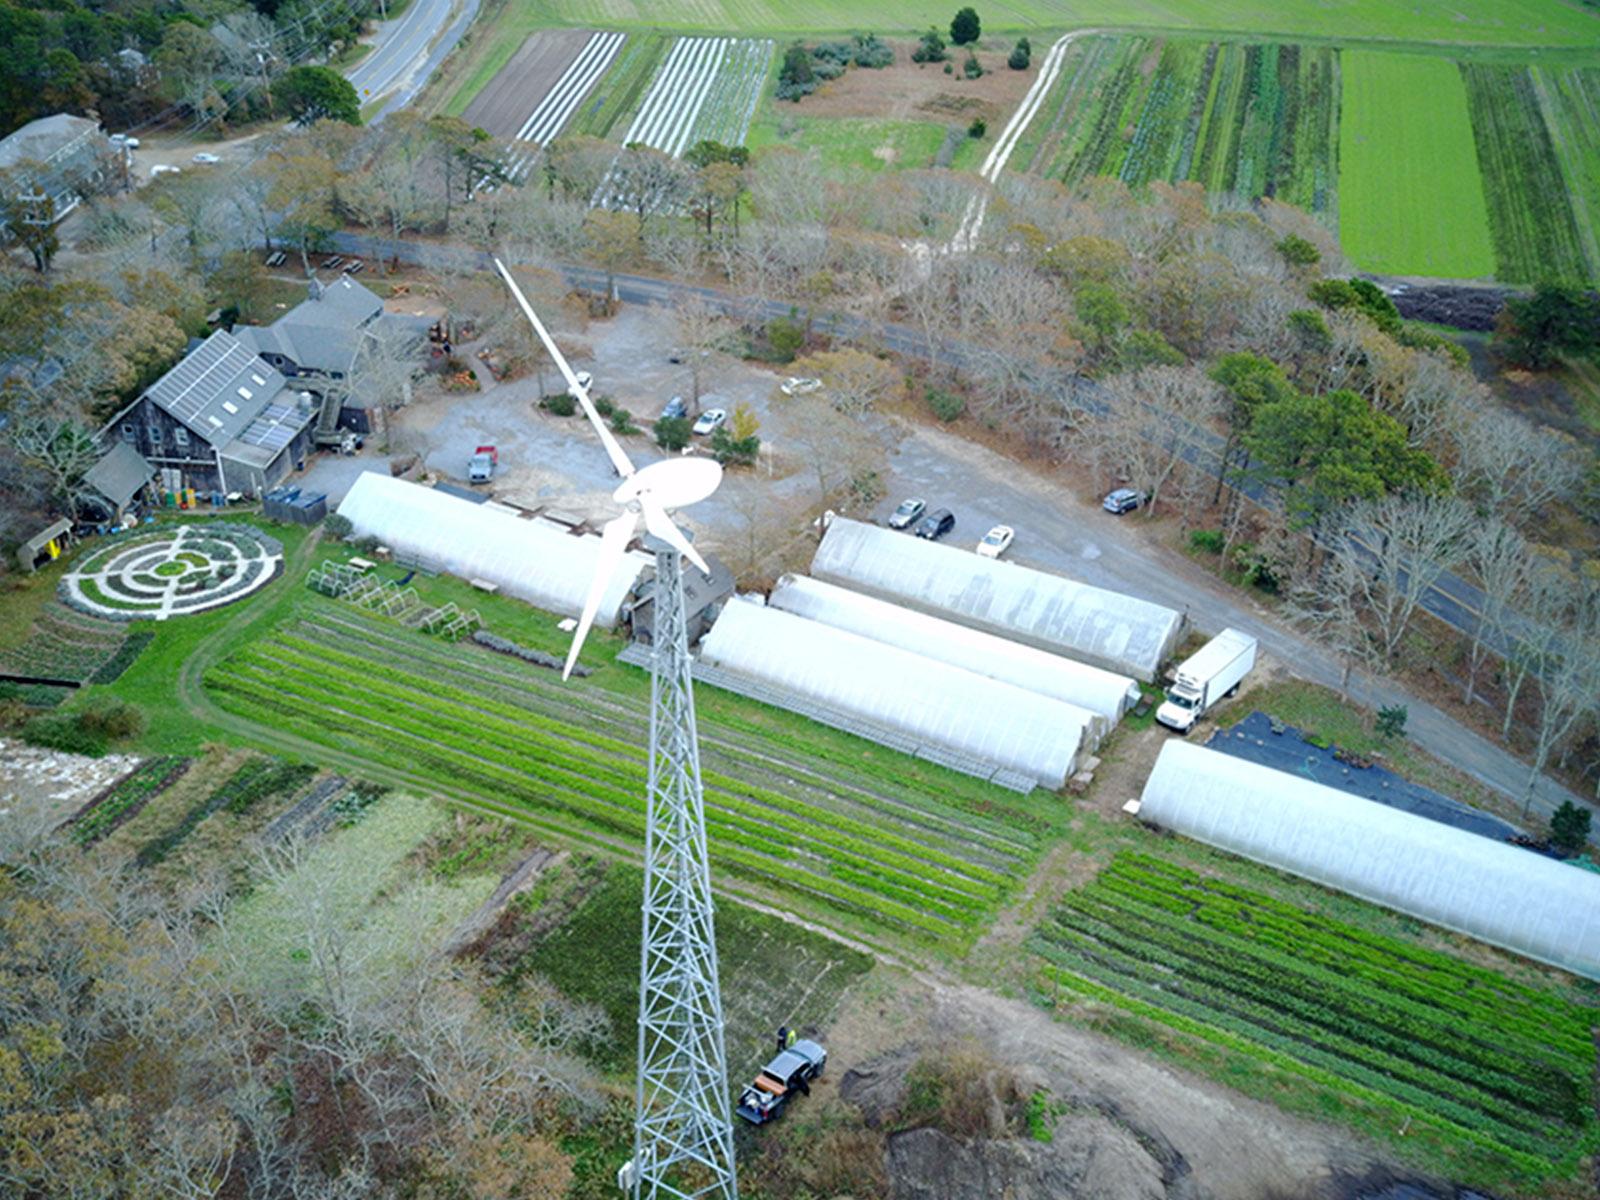 turbine above green area with farm